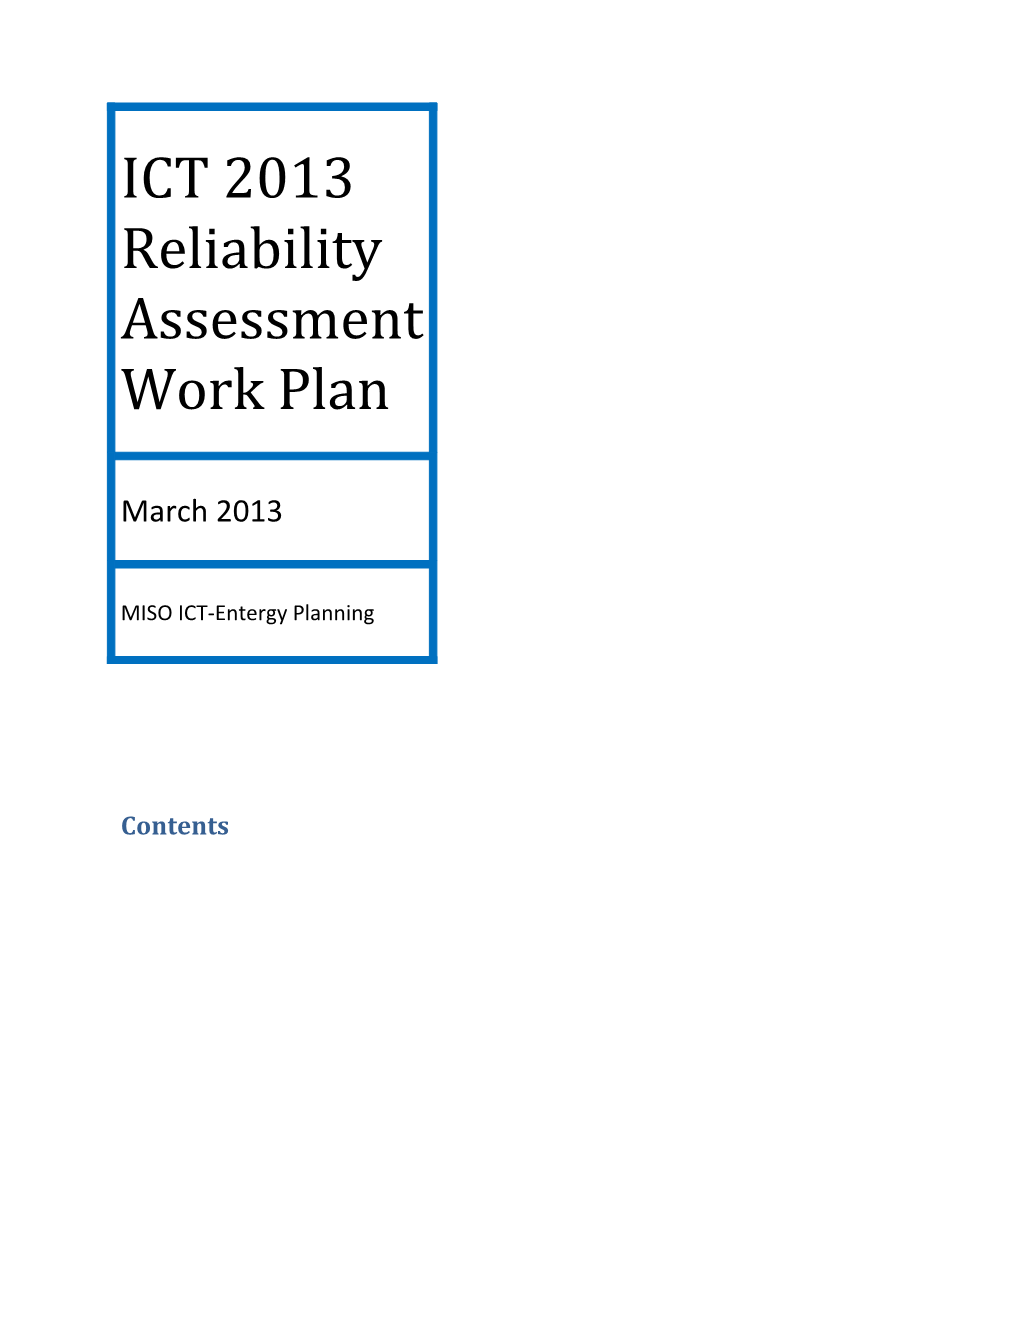 ICT 2013 Reliability Analysis Work Plan